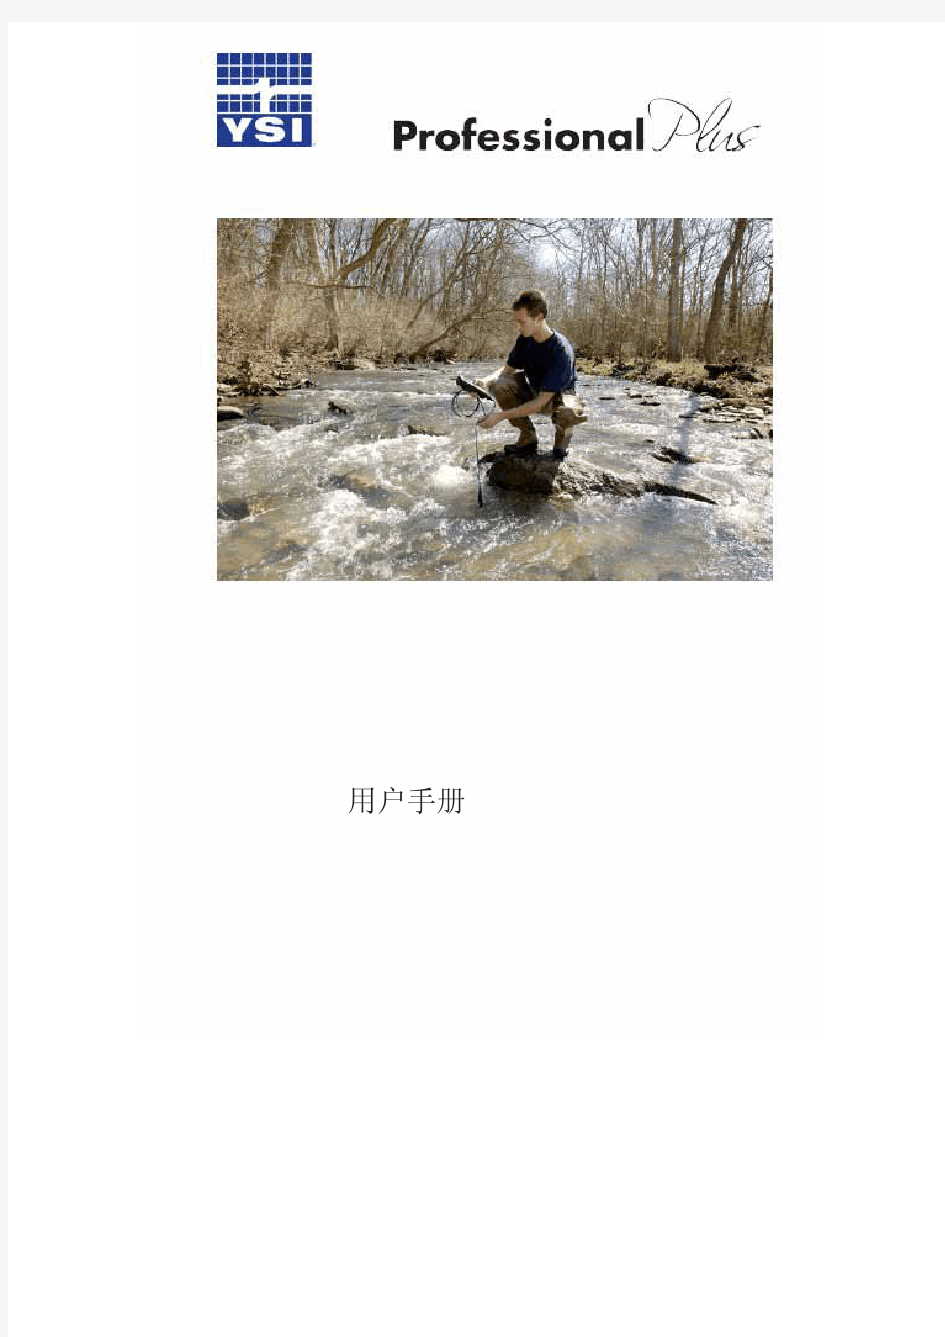 YSI多参数水质分析仪Proplus 中文操作手册